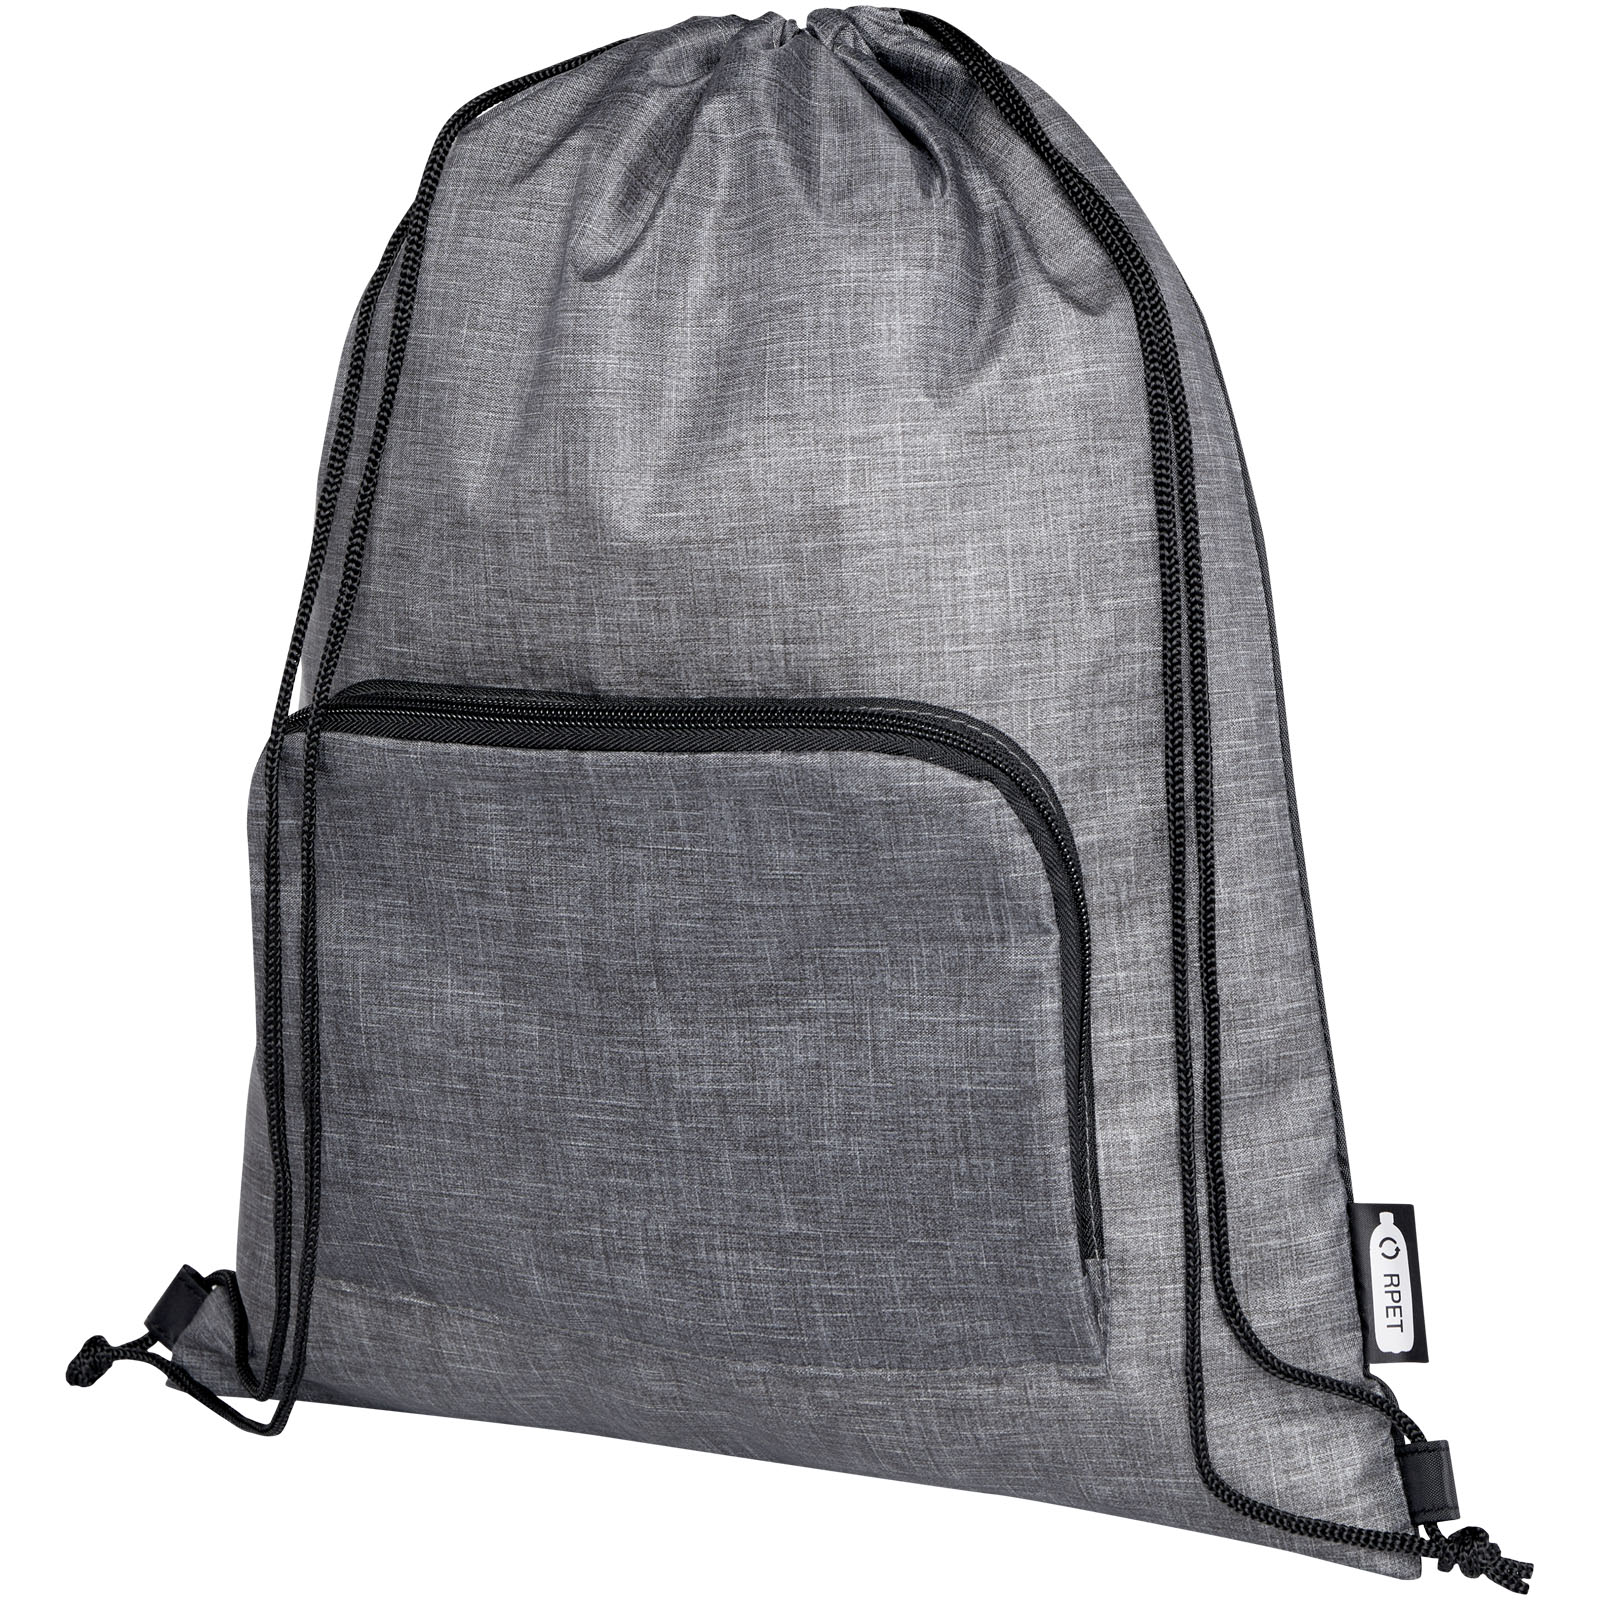 Drawstring Bags - Ash recycled foldable drawstring bag 7L